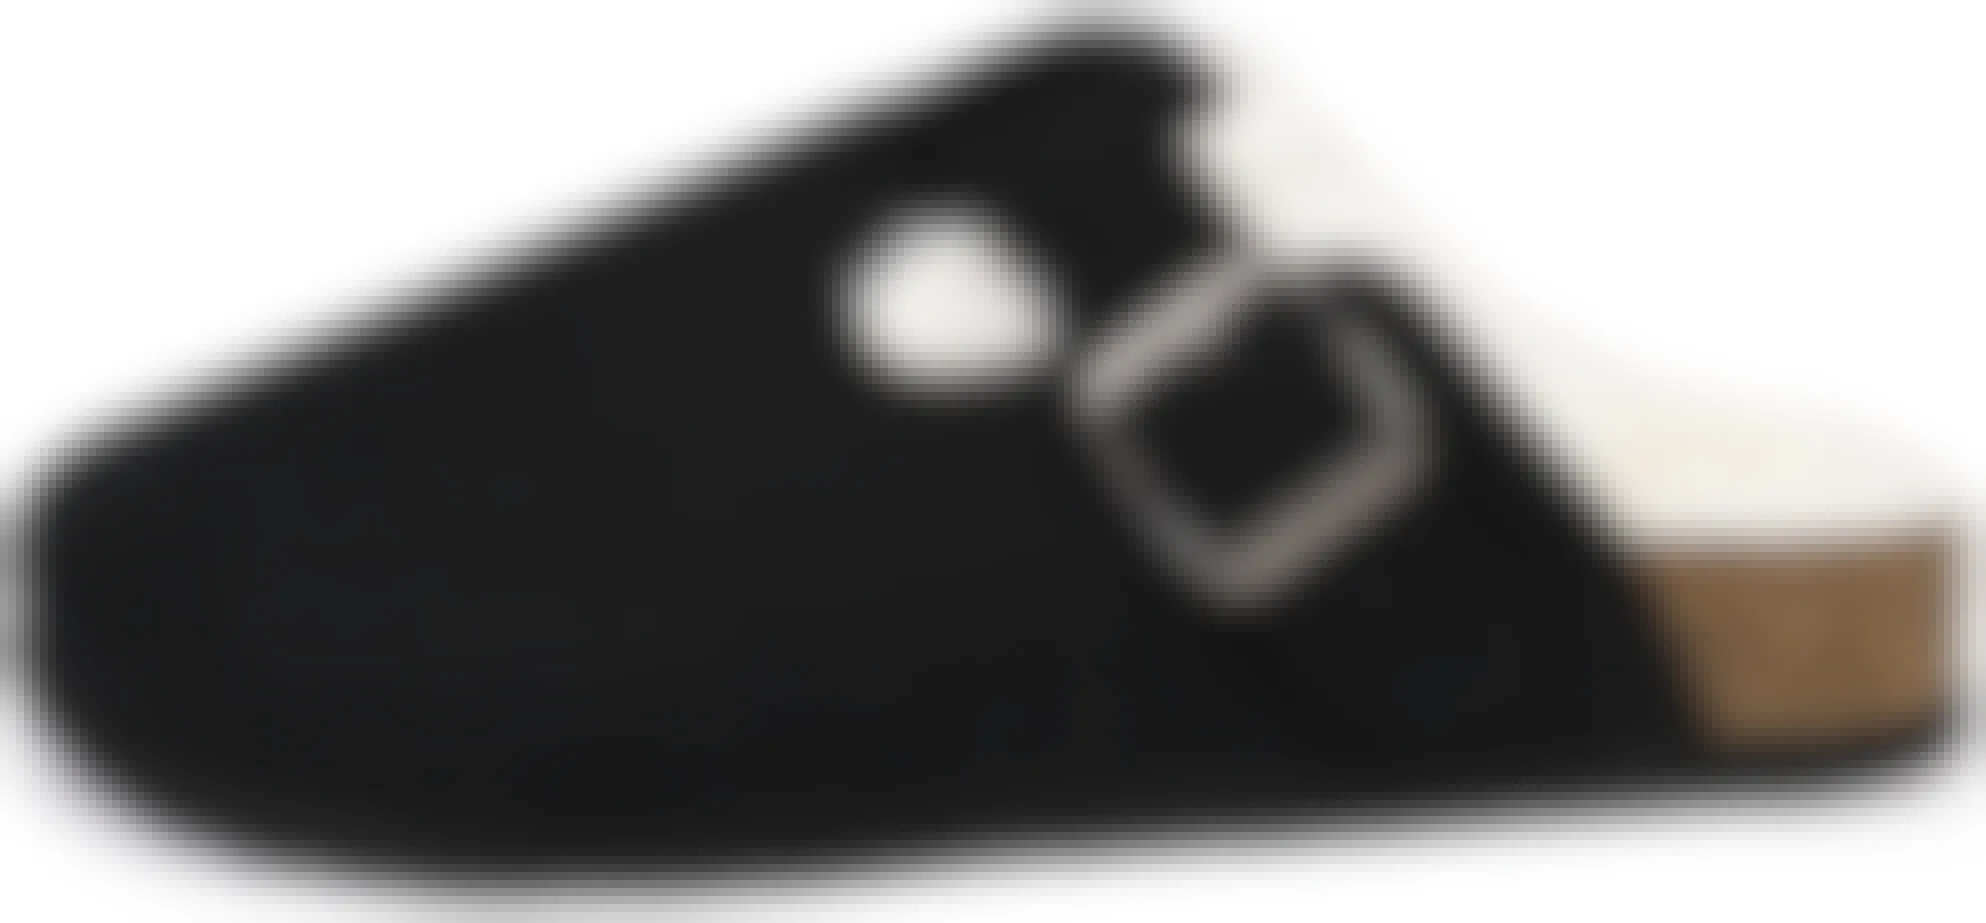 A Maiitrip Orthotics Cork Clog Slipper on a white background